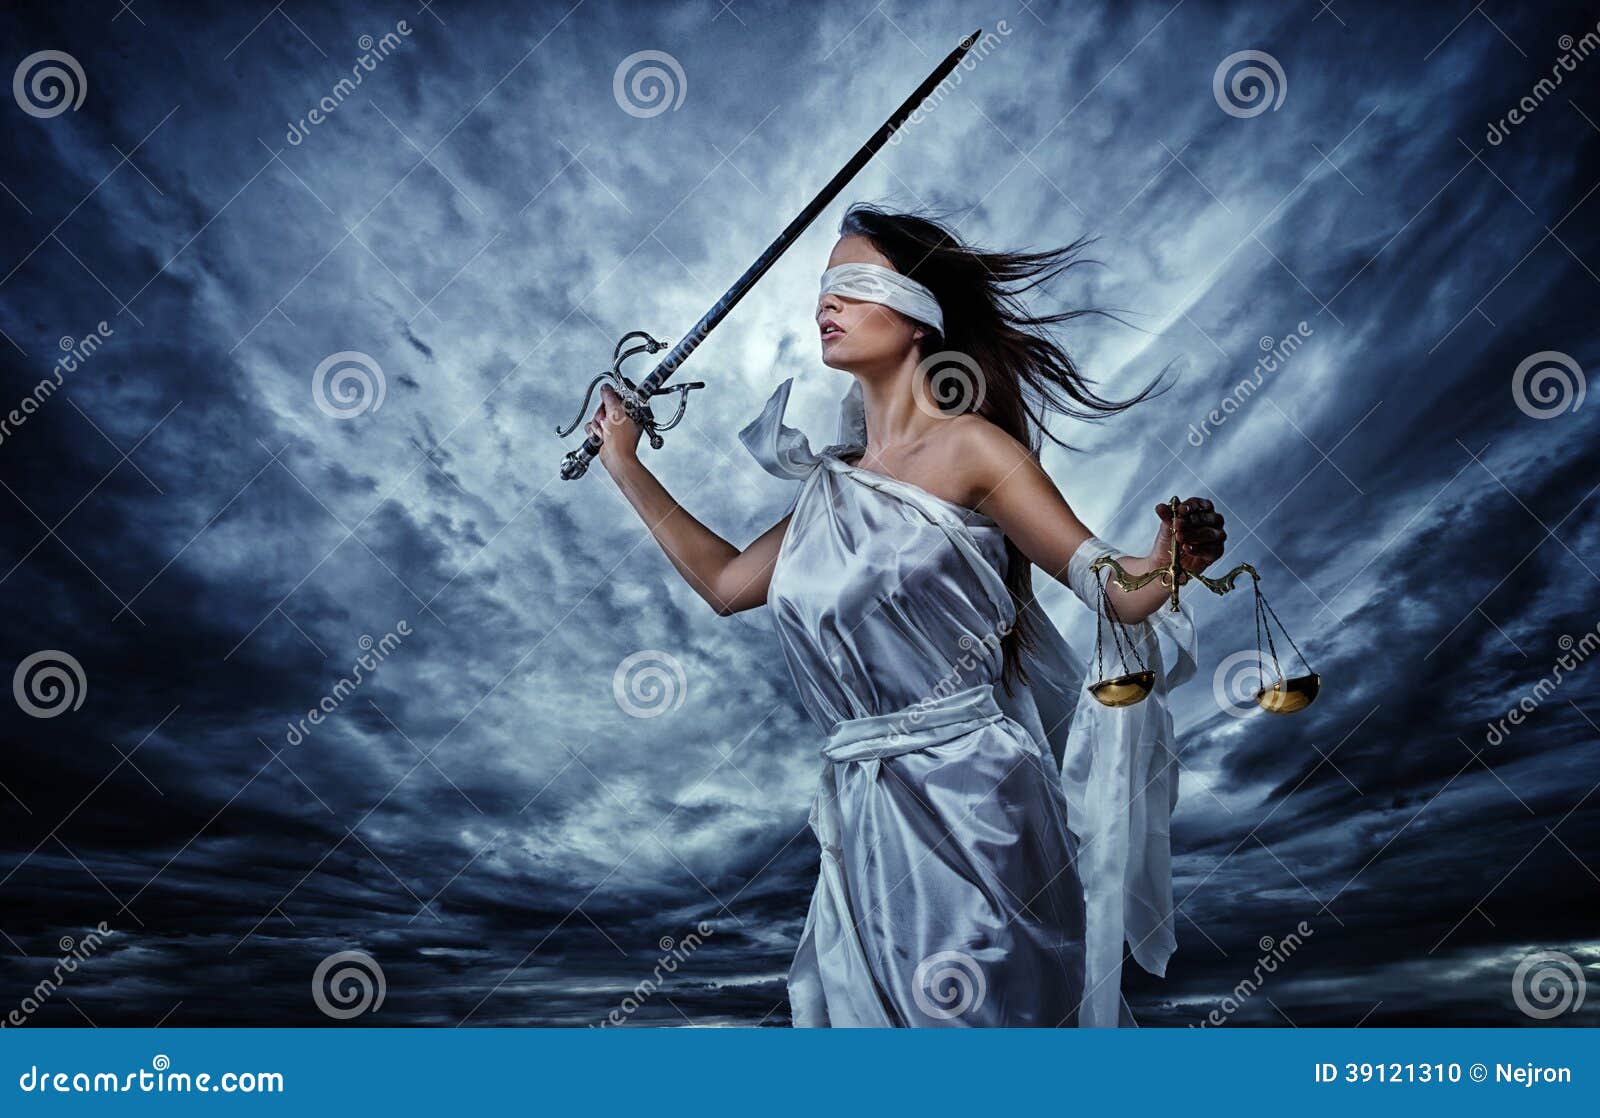 femida, goddess of justice